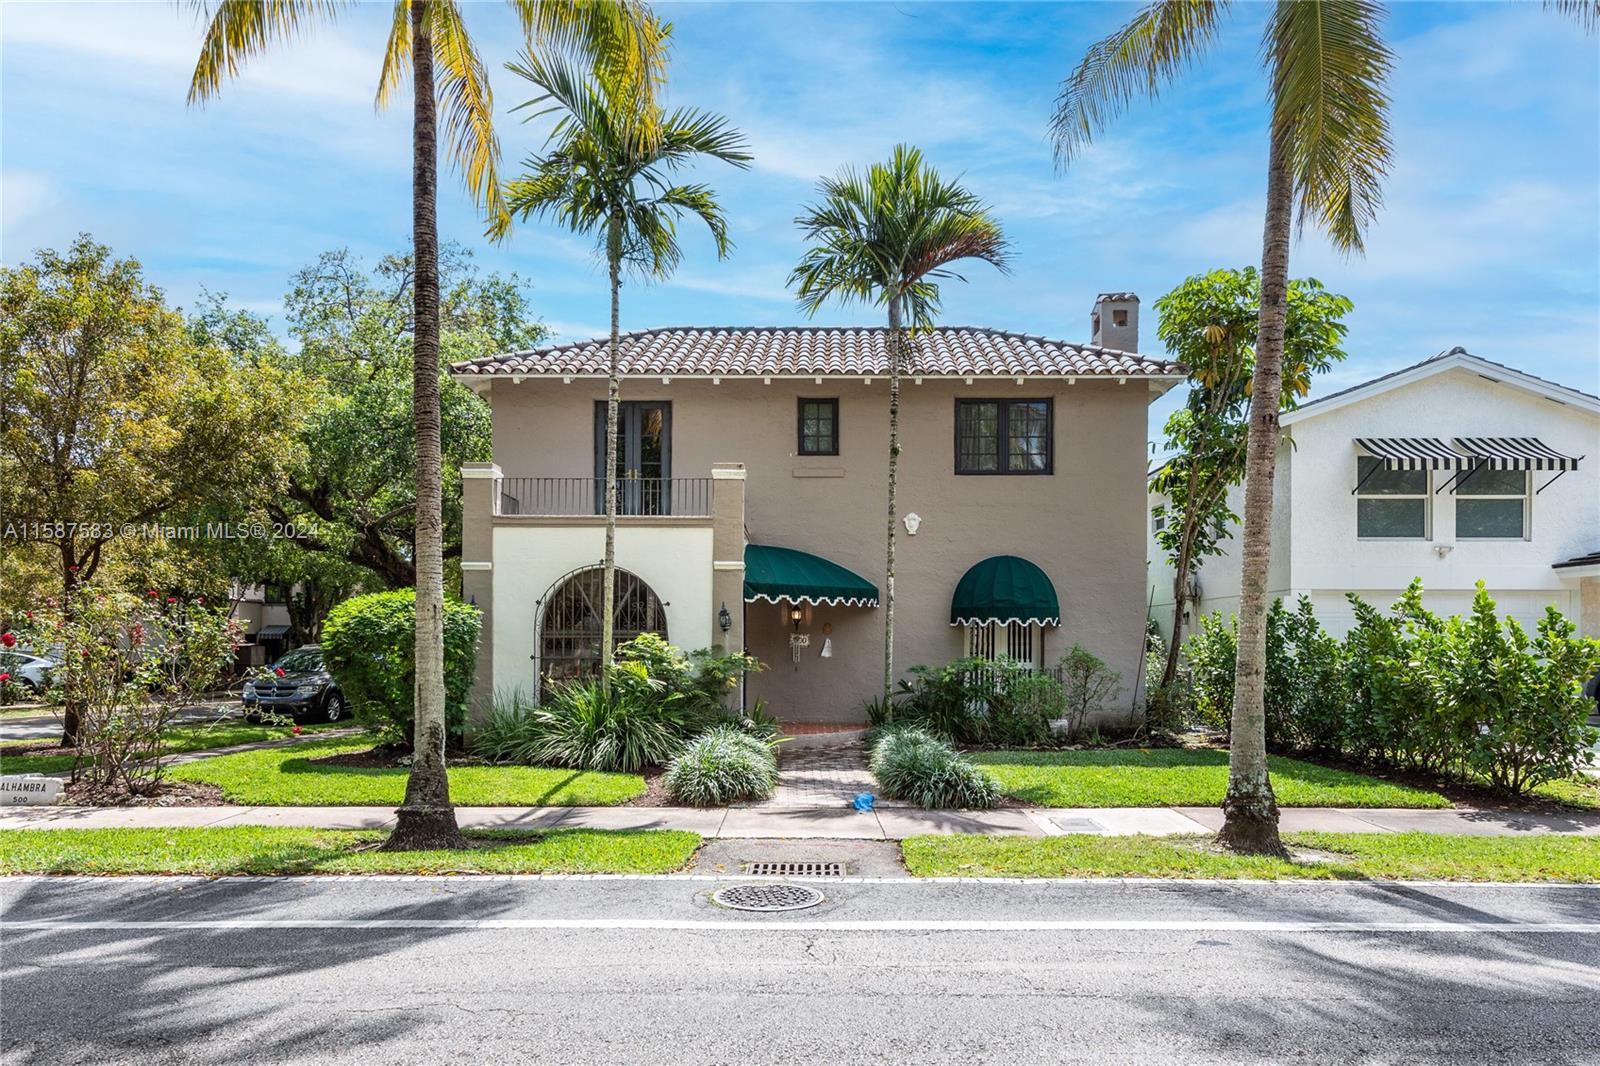 Property for Sale at 500 Alhambra Cir Cir, Coral Gables, Broward County, Florida - Bedrooms: 4 
Bathrooms: 3  - $1,895,000